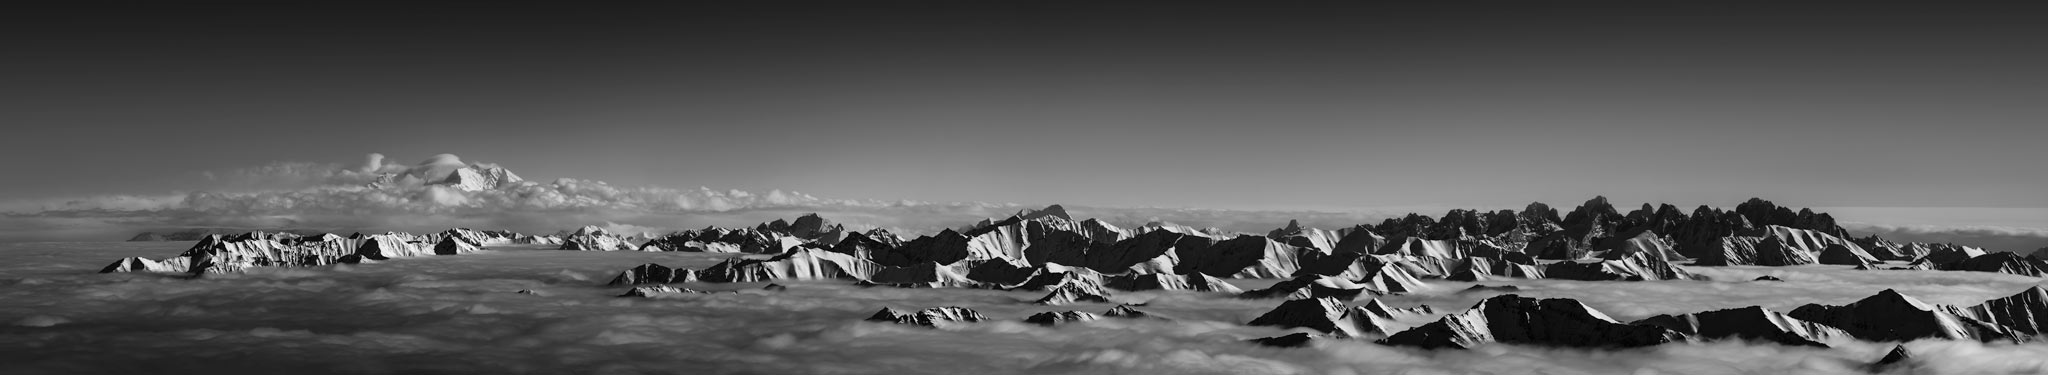 2016-iditarod-alaska-027-alaska-spires-range-mountains-panoramic-black-and-white-danali-mountain